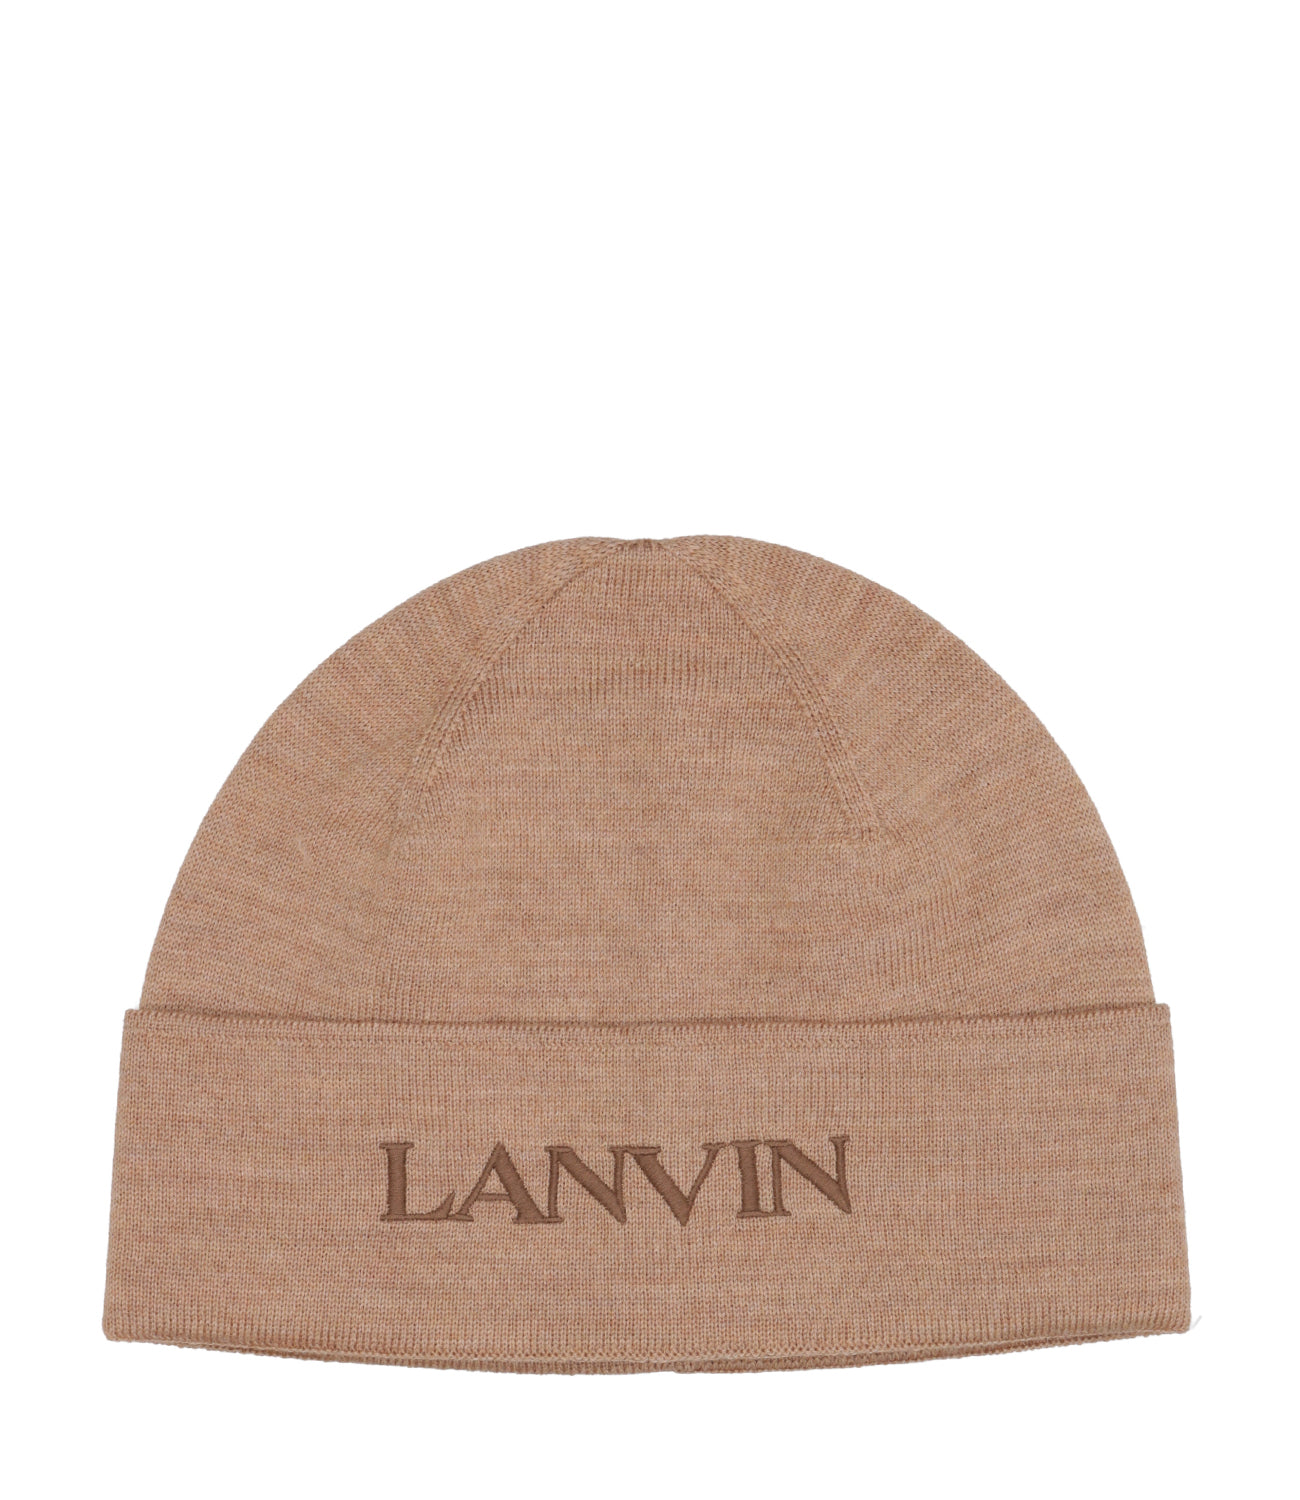 Lanvin | Beige Hat